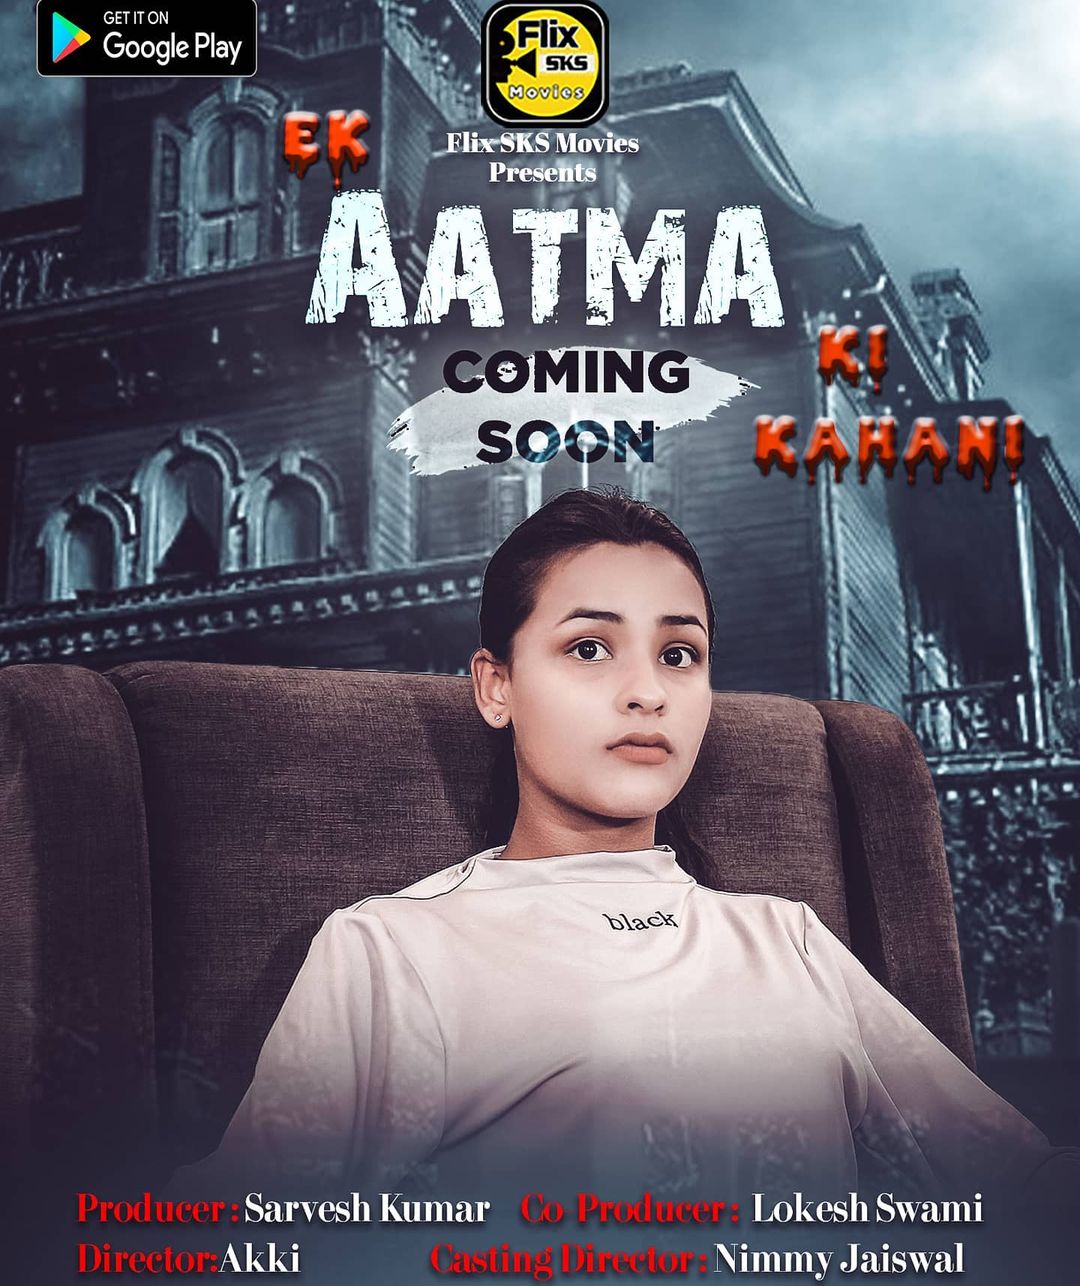 Ek Aatma Ki Kahani (2020) Season 1 Episode 2 FlixSKSMovies (2020)